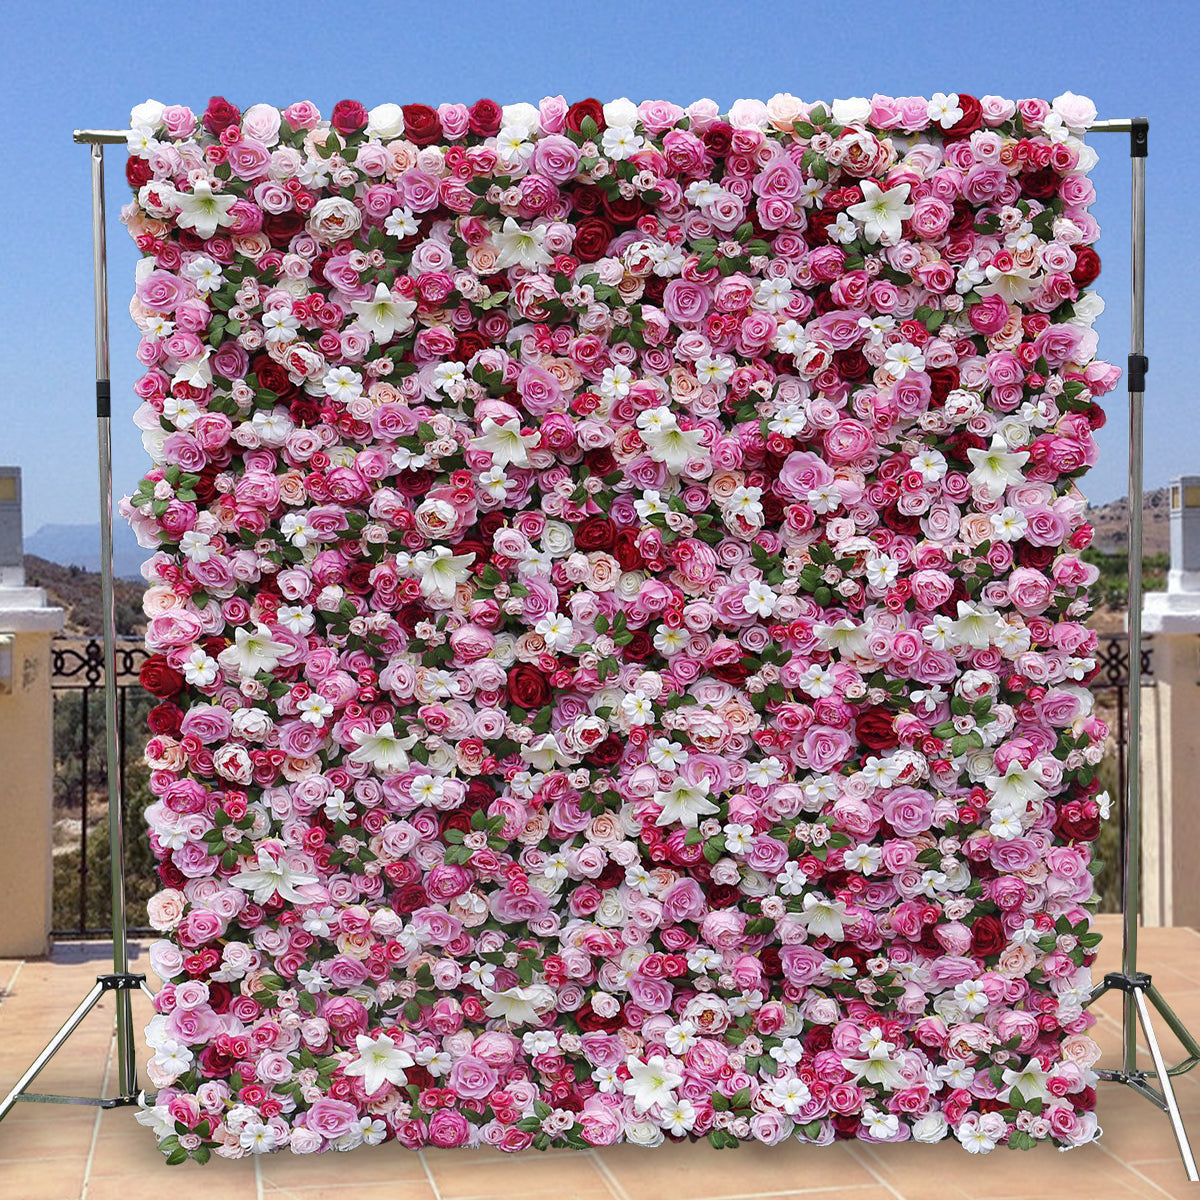 5D Artificial Flower Wall Arrangement Wedding Party Birthday Backdrop Decor HQ9033